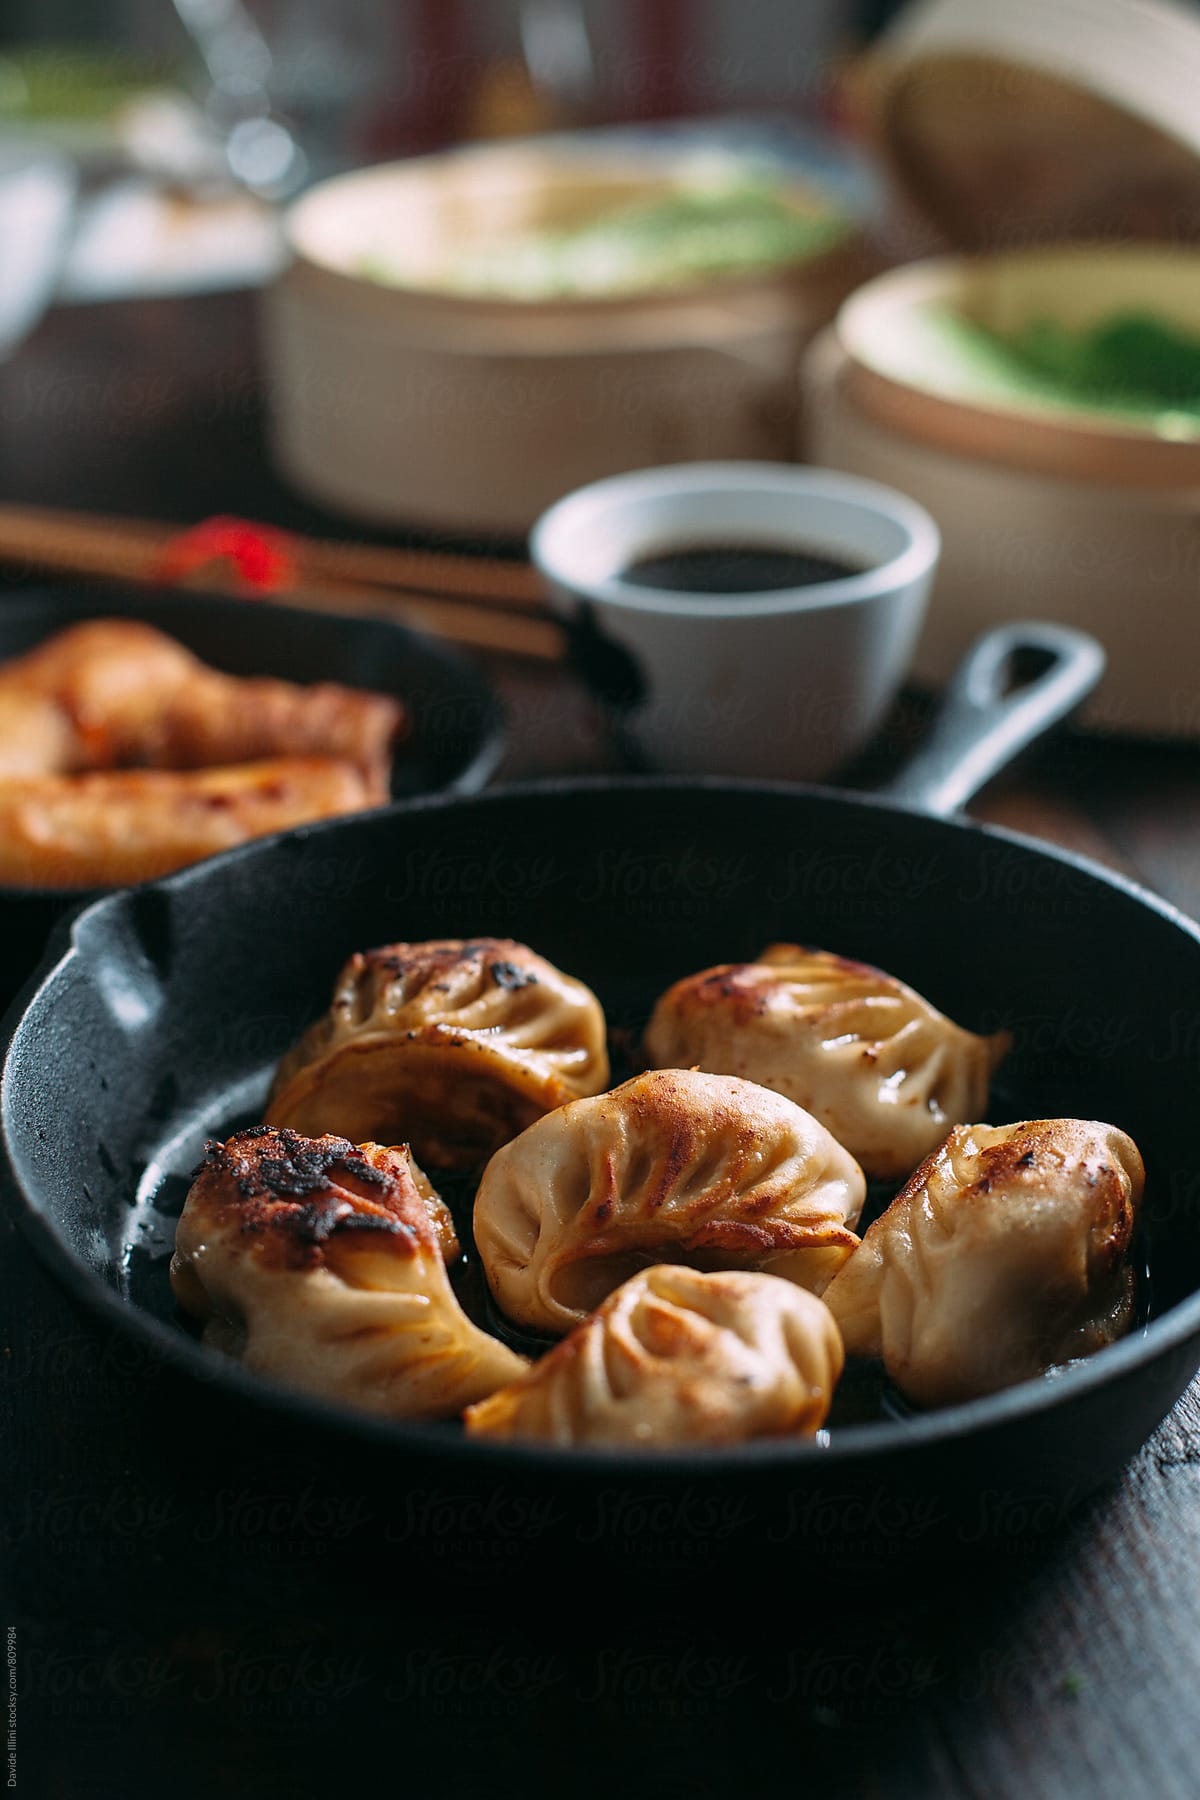 Roasted Chinese Dumpling